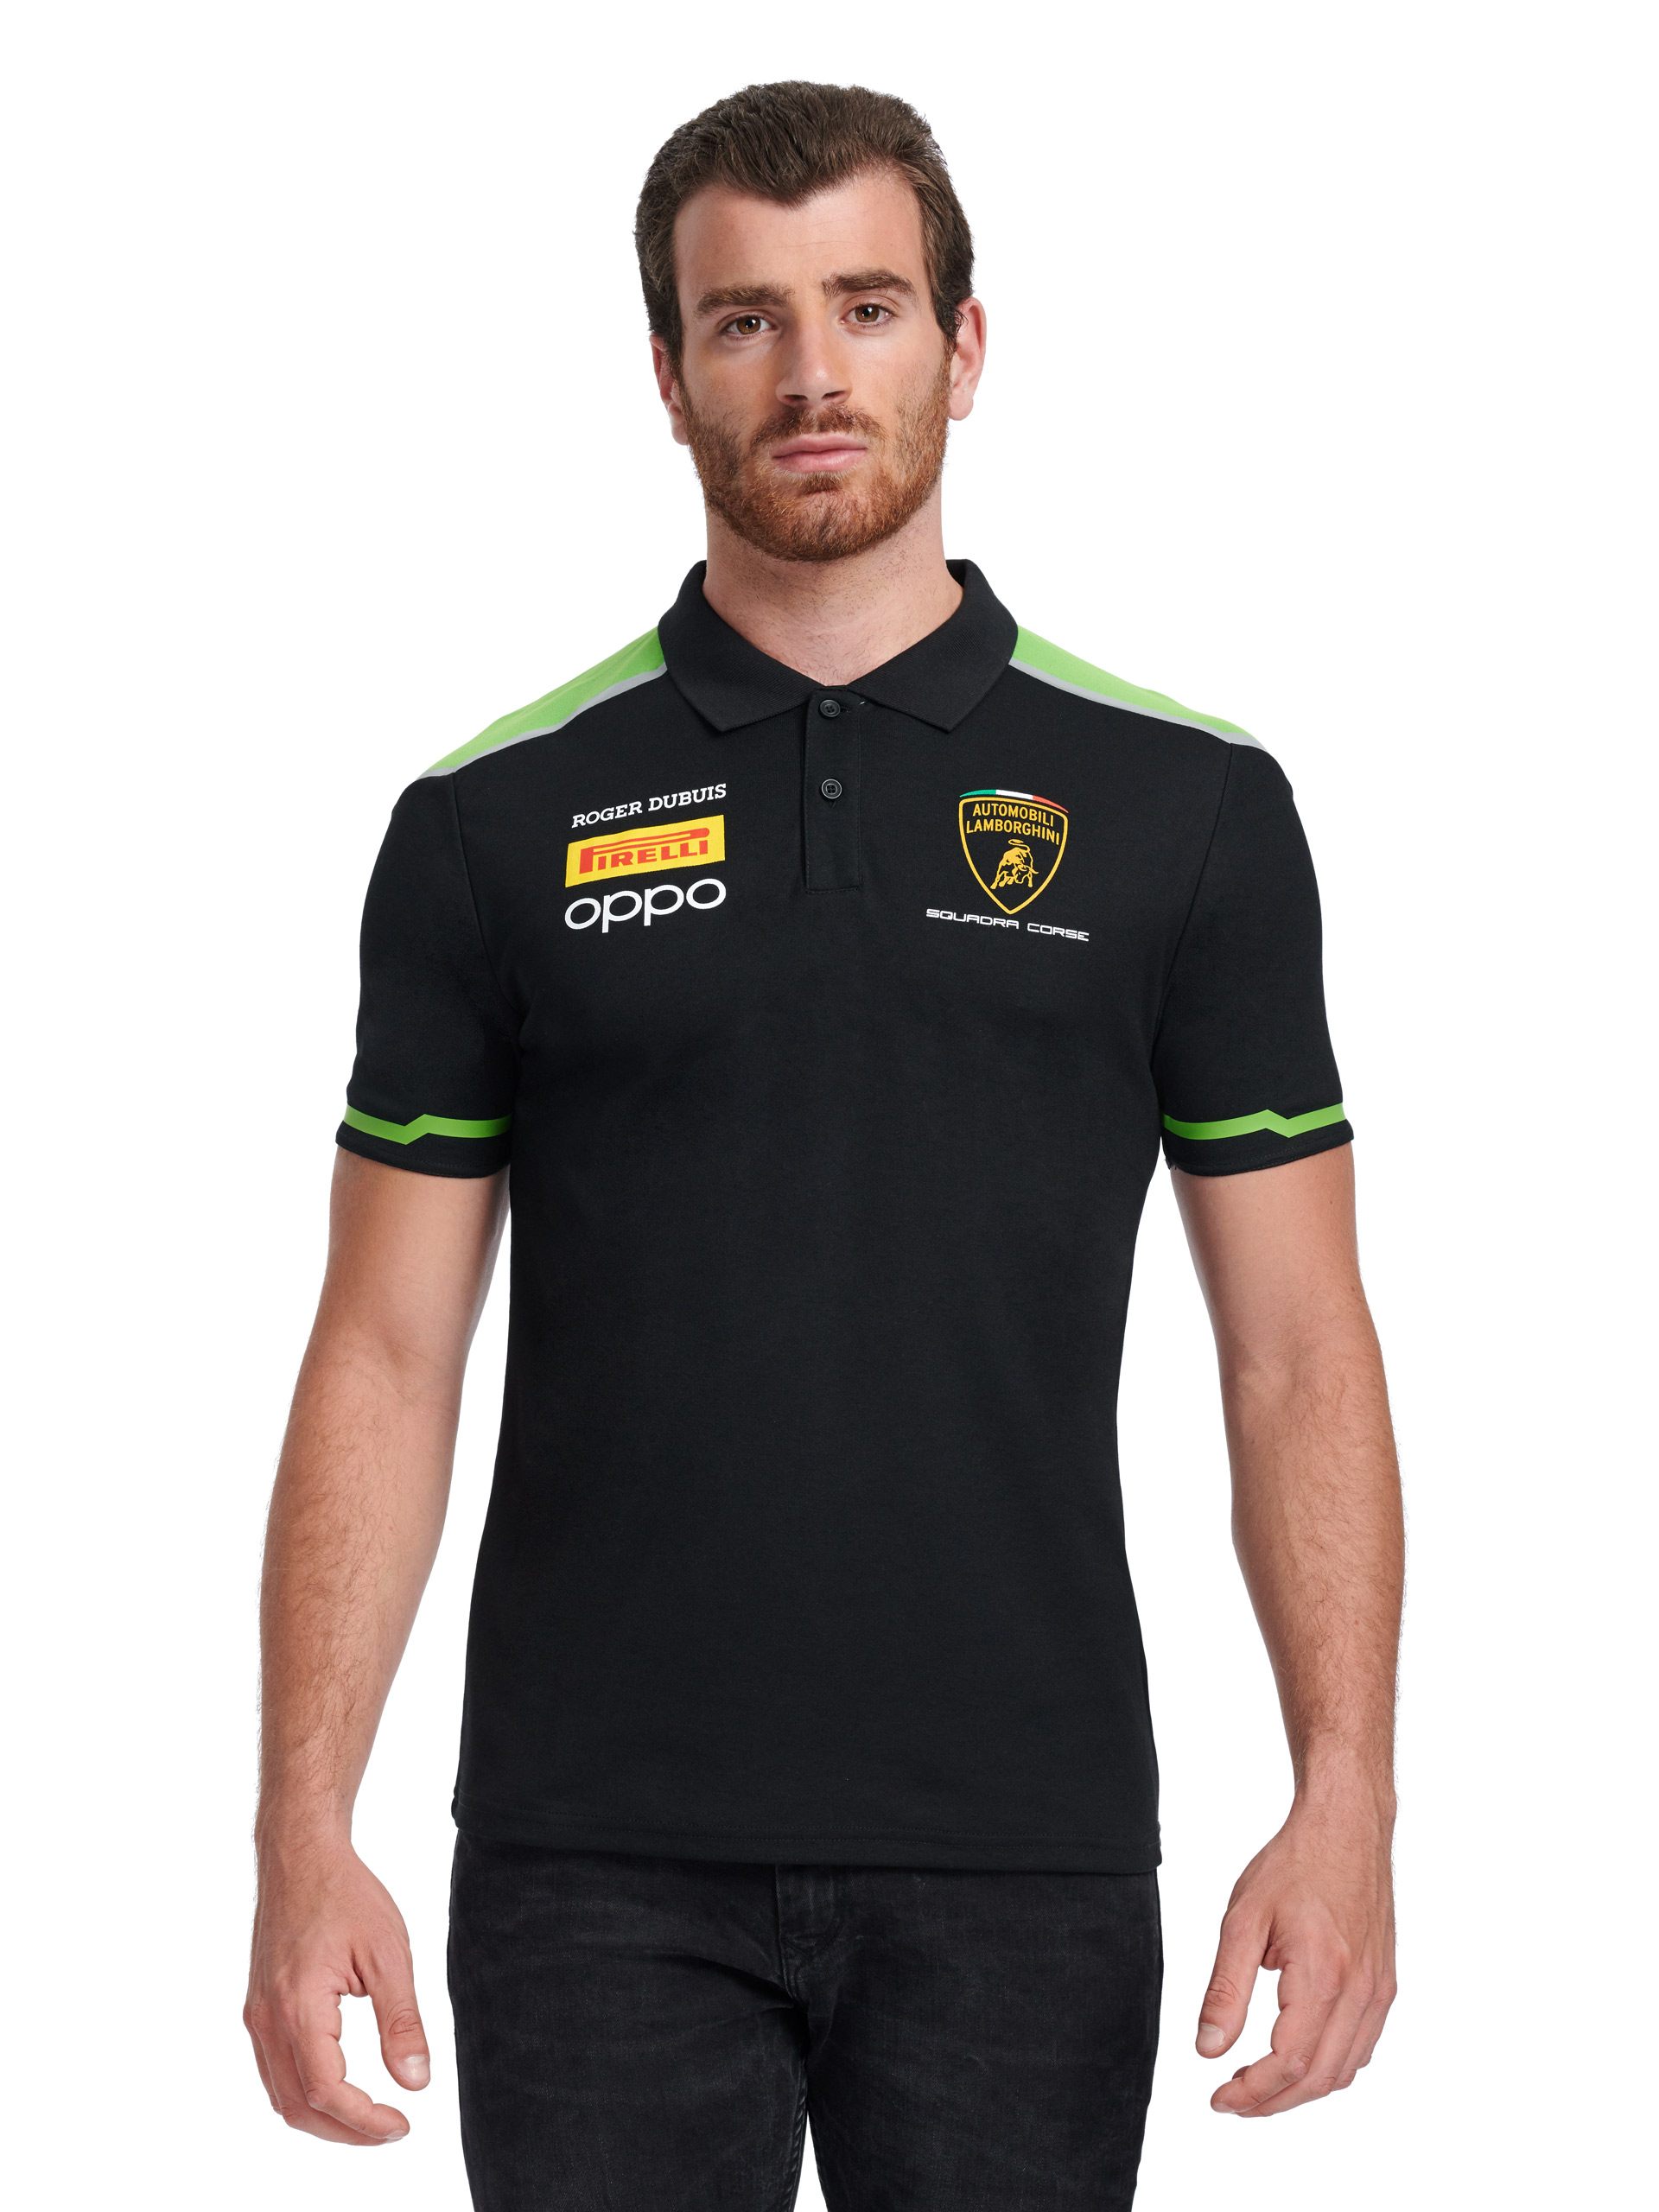 LAMBORGHINI 2020 Squadra Corse Mens Team Polo Shirt Black XXXL